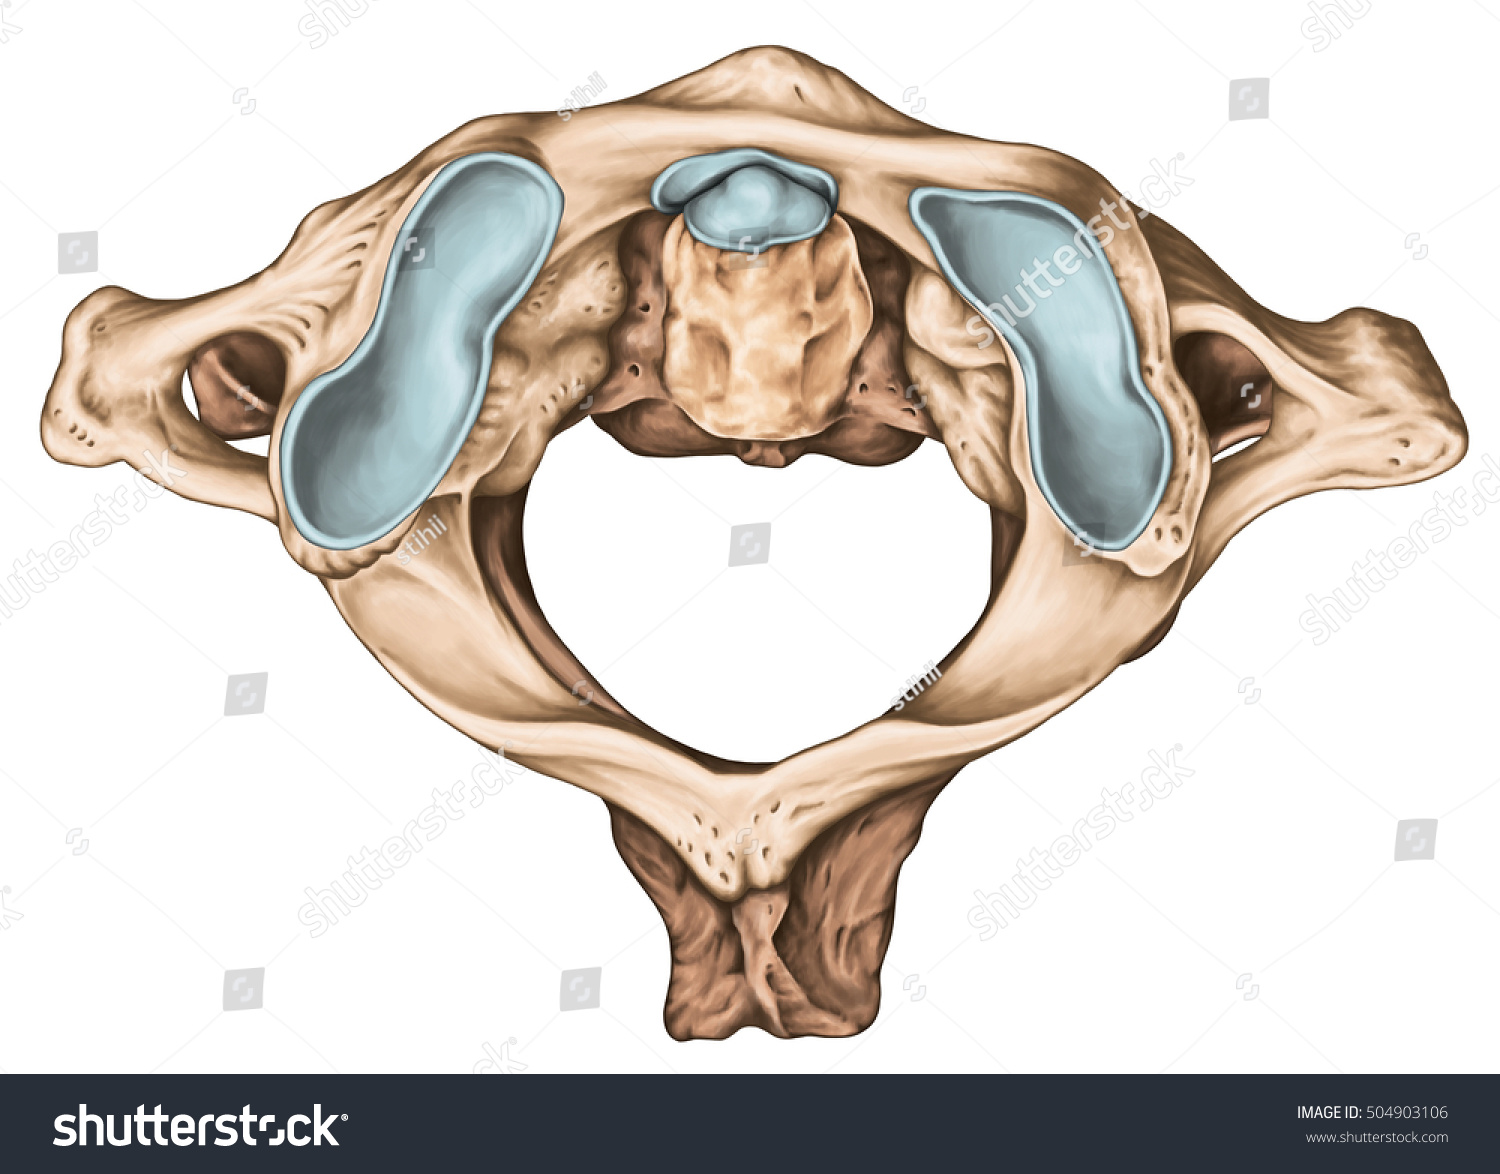 cow cervical vertebrae